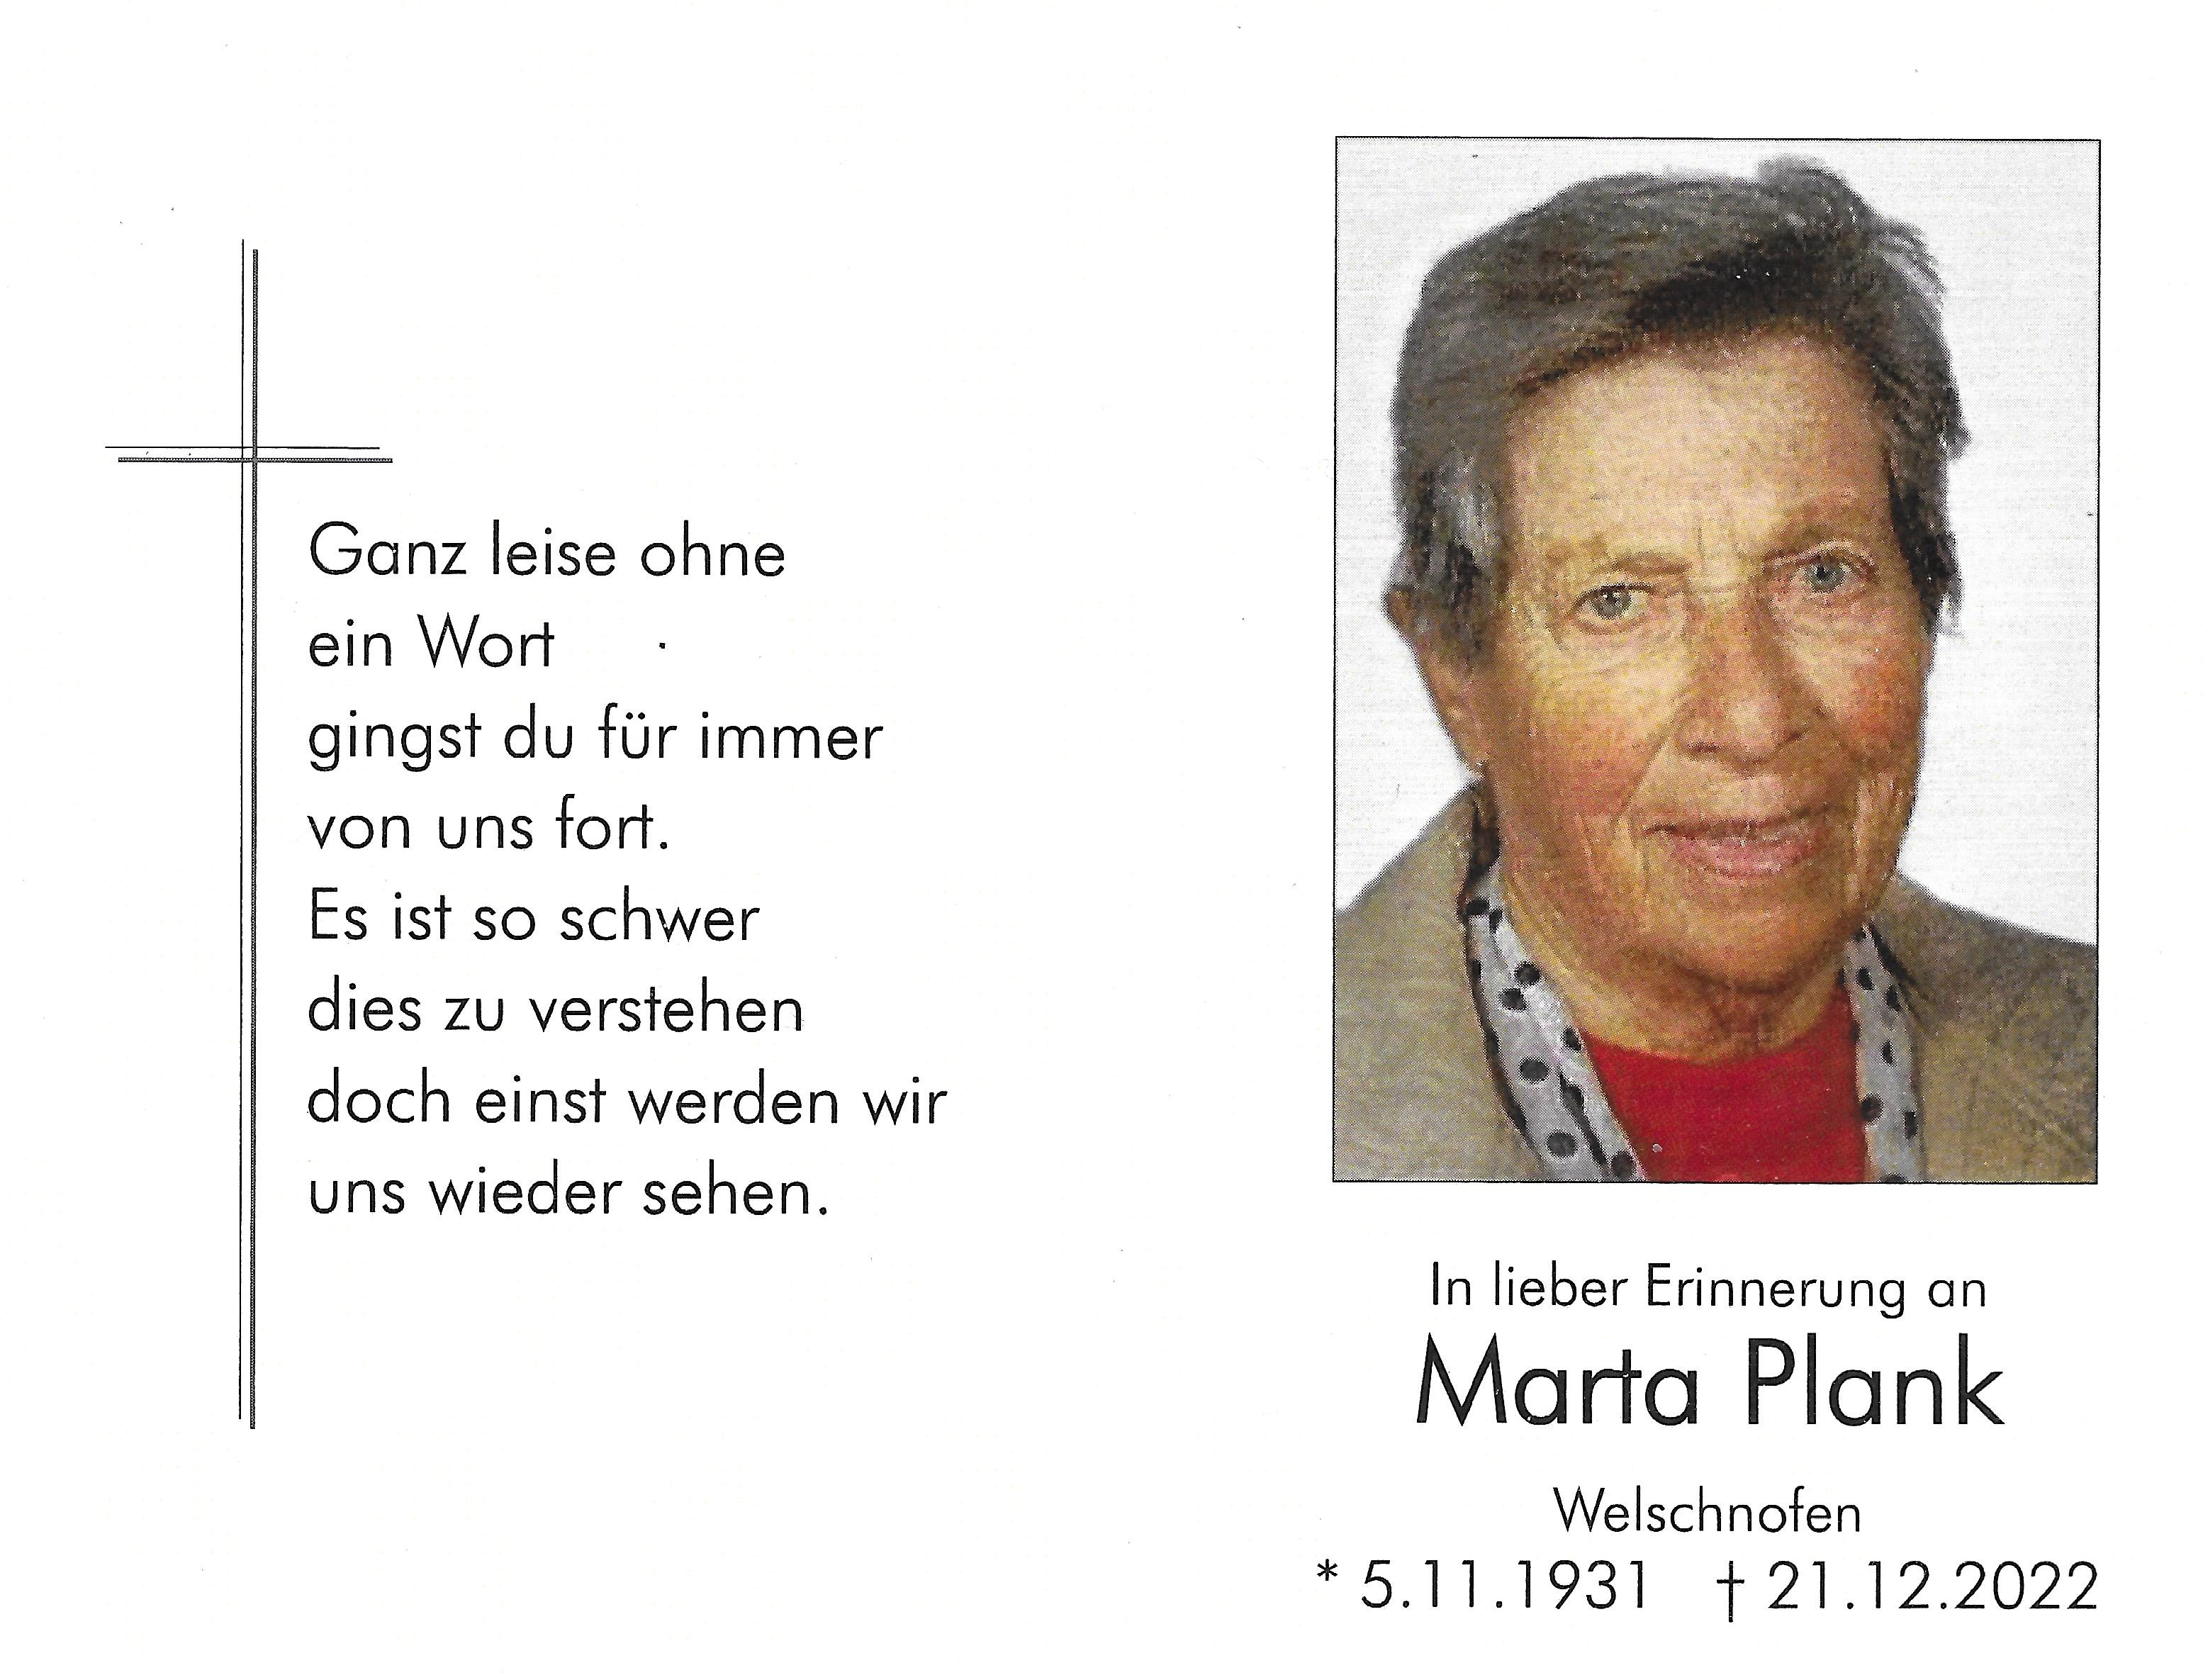 Marta Plank